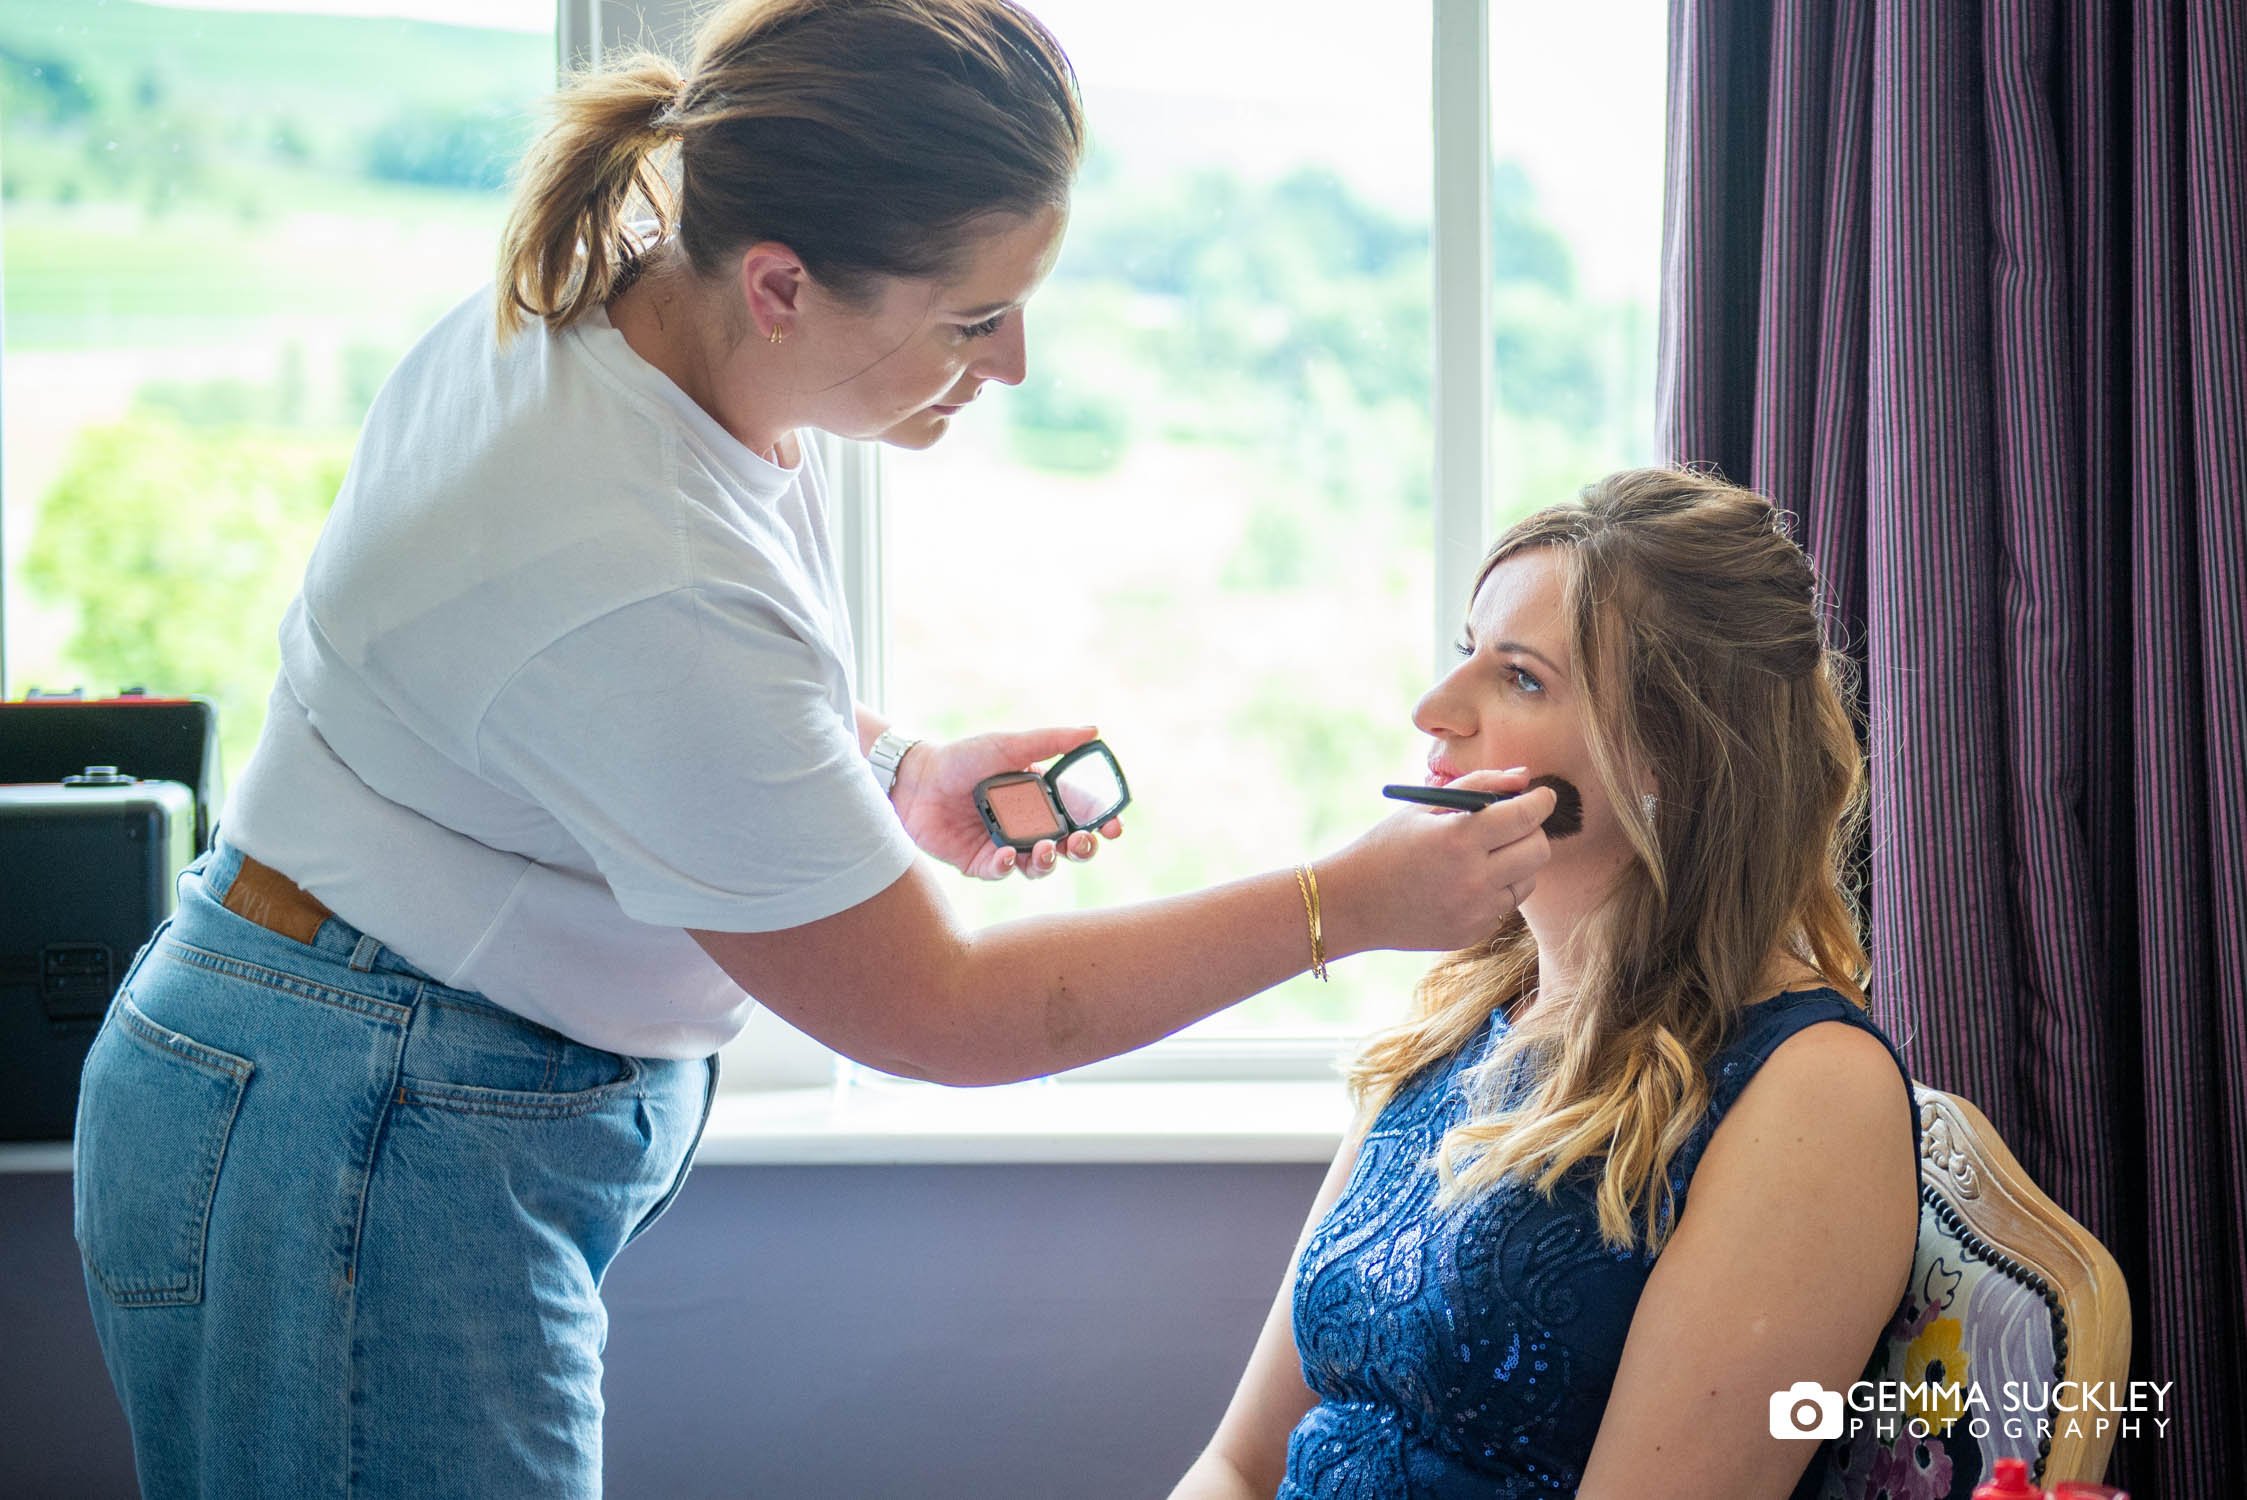 makeup artist applying make up to the bridesmaid